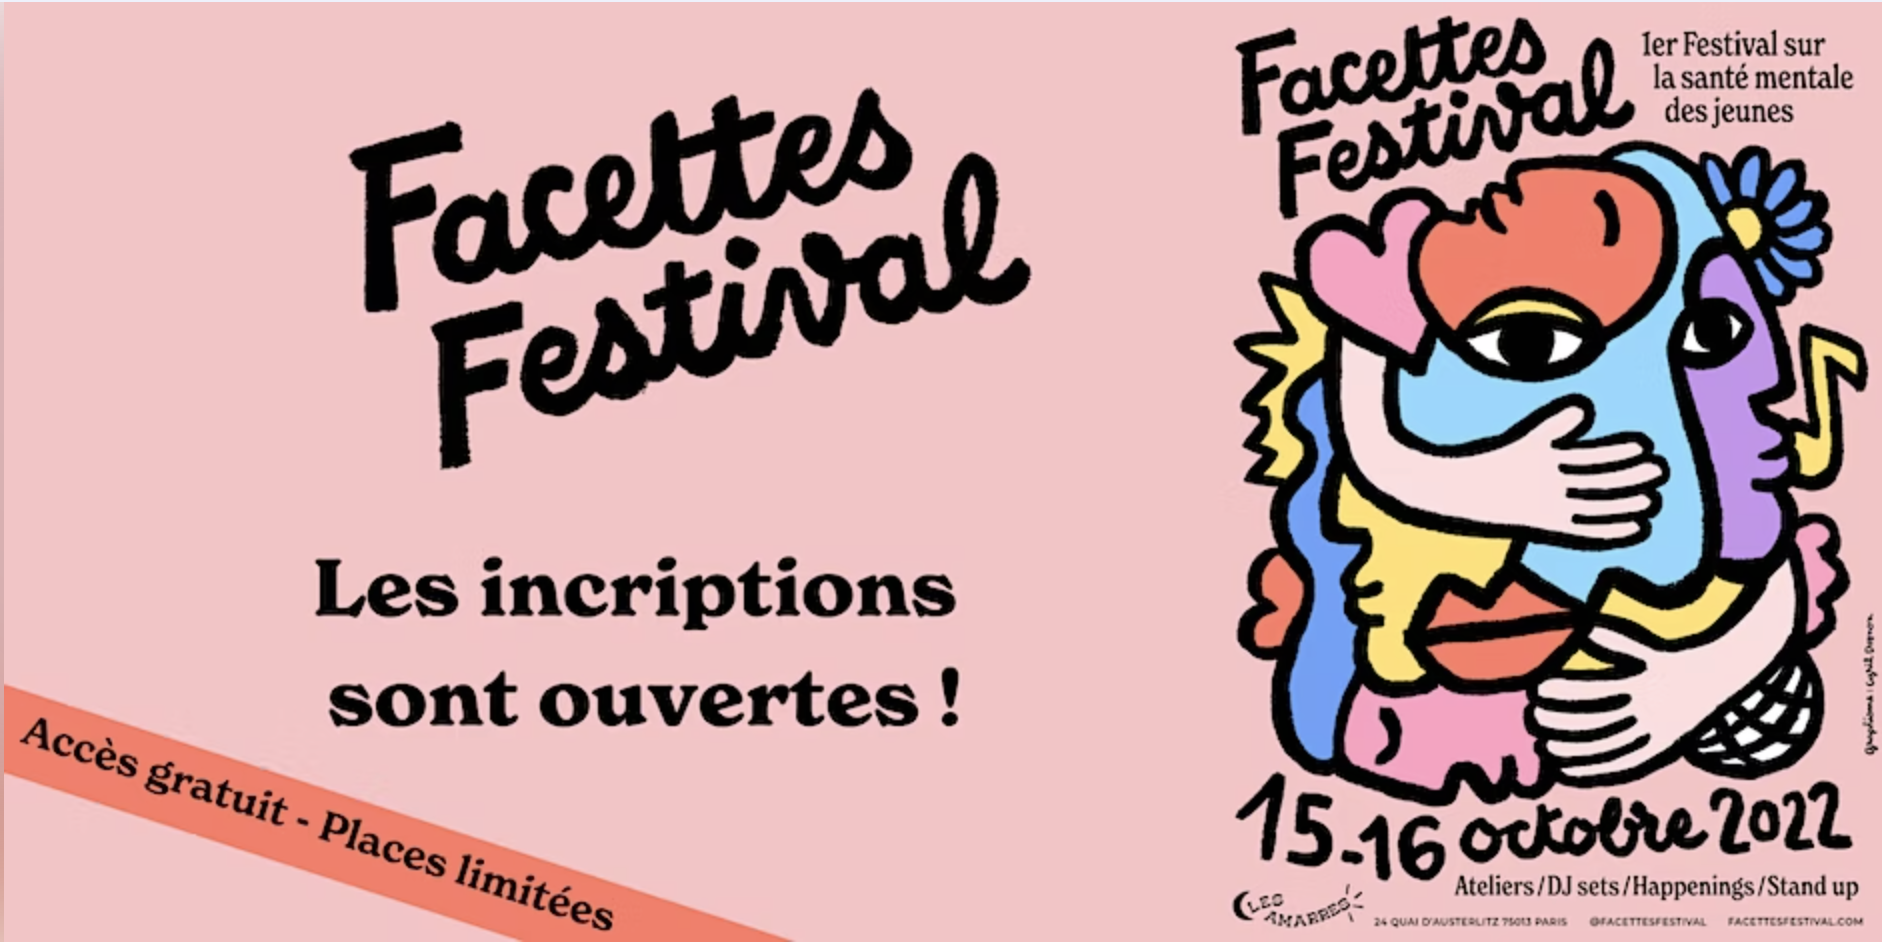 Facettes Festival x mūsae